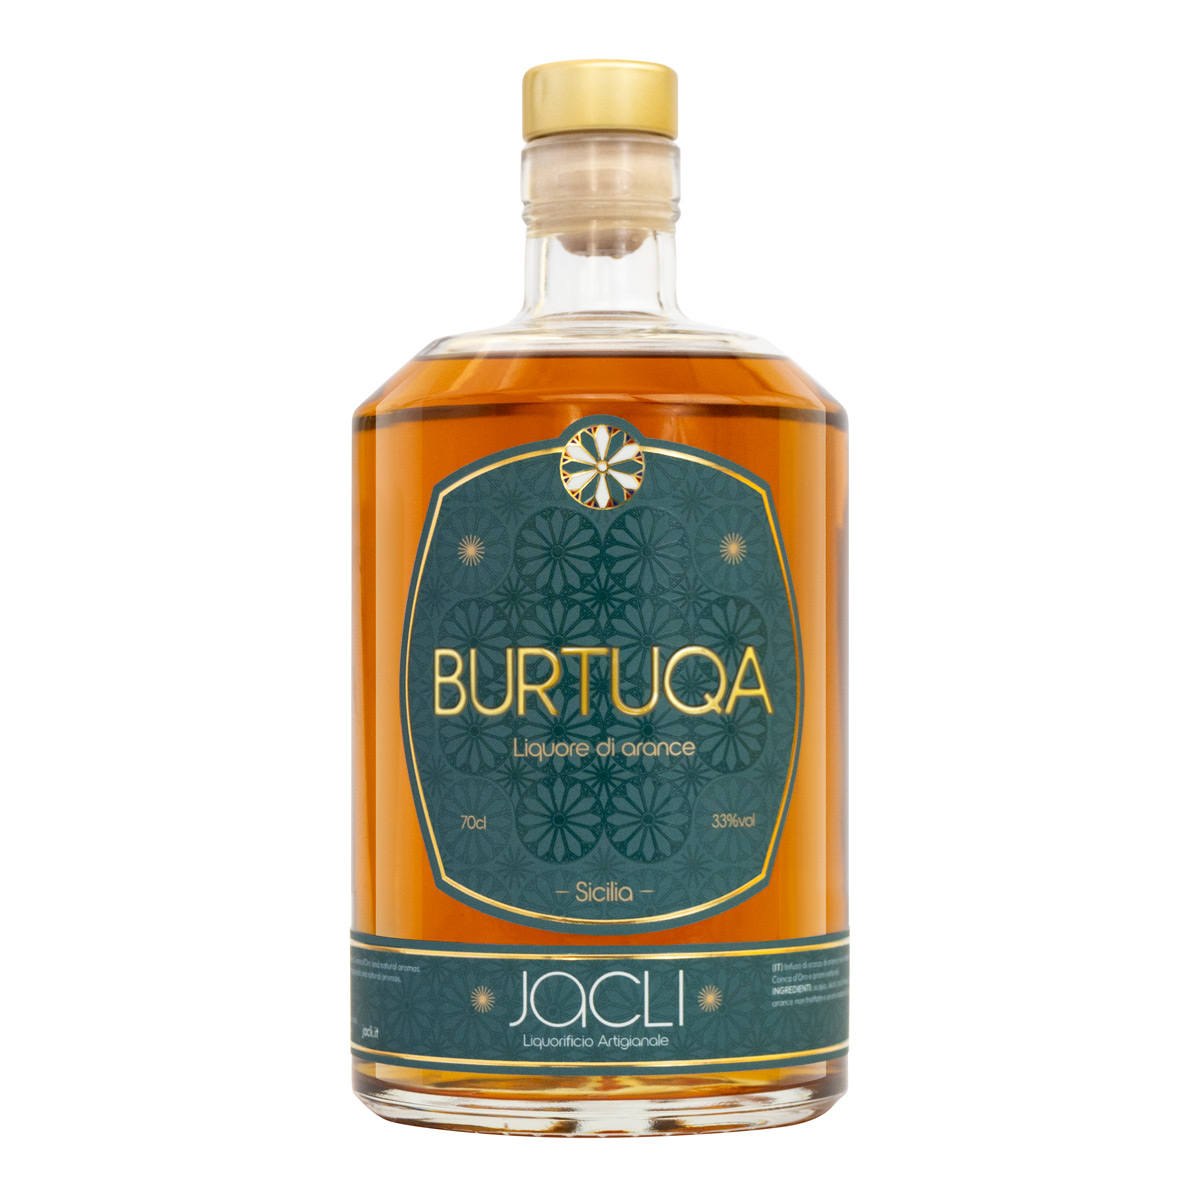 Burtuqa – Liquore di arance